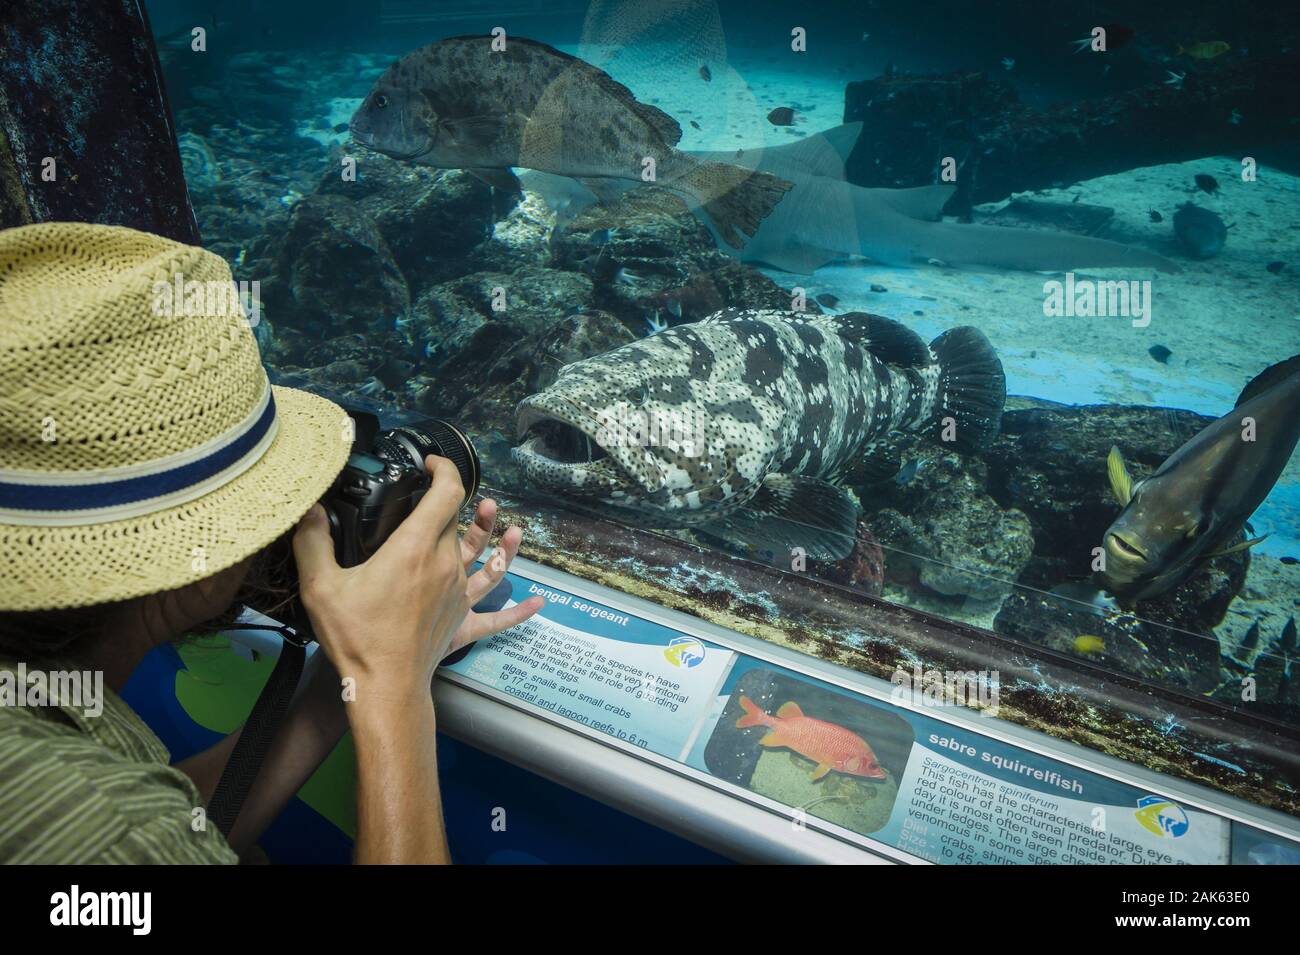 Queensland: "Reef HQ Great Barrier Reef Aquarium" in Townsville, Australien Osten | usage worldwide Stock Photo